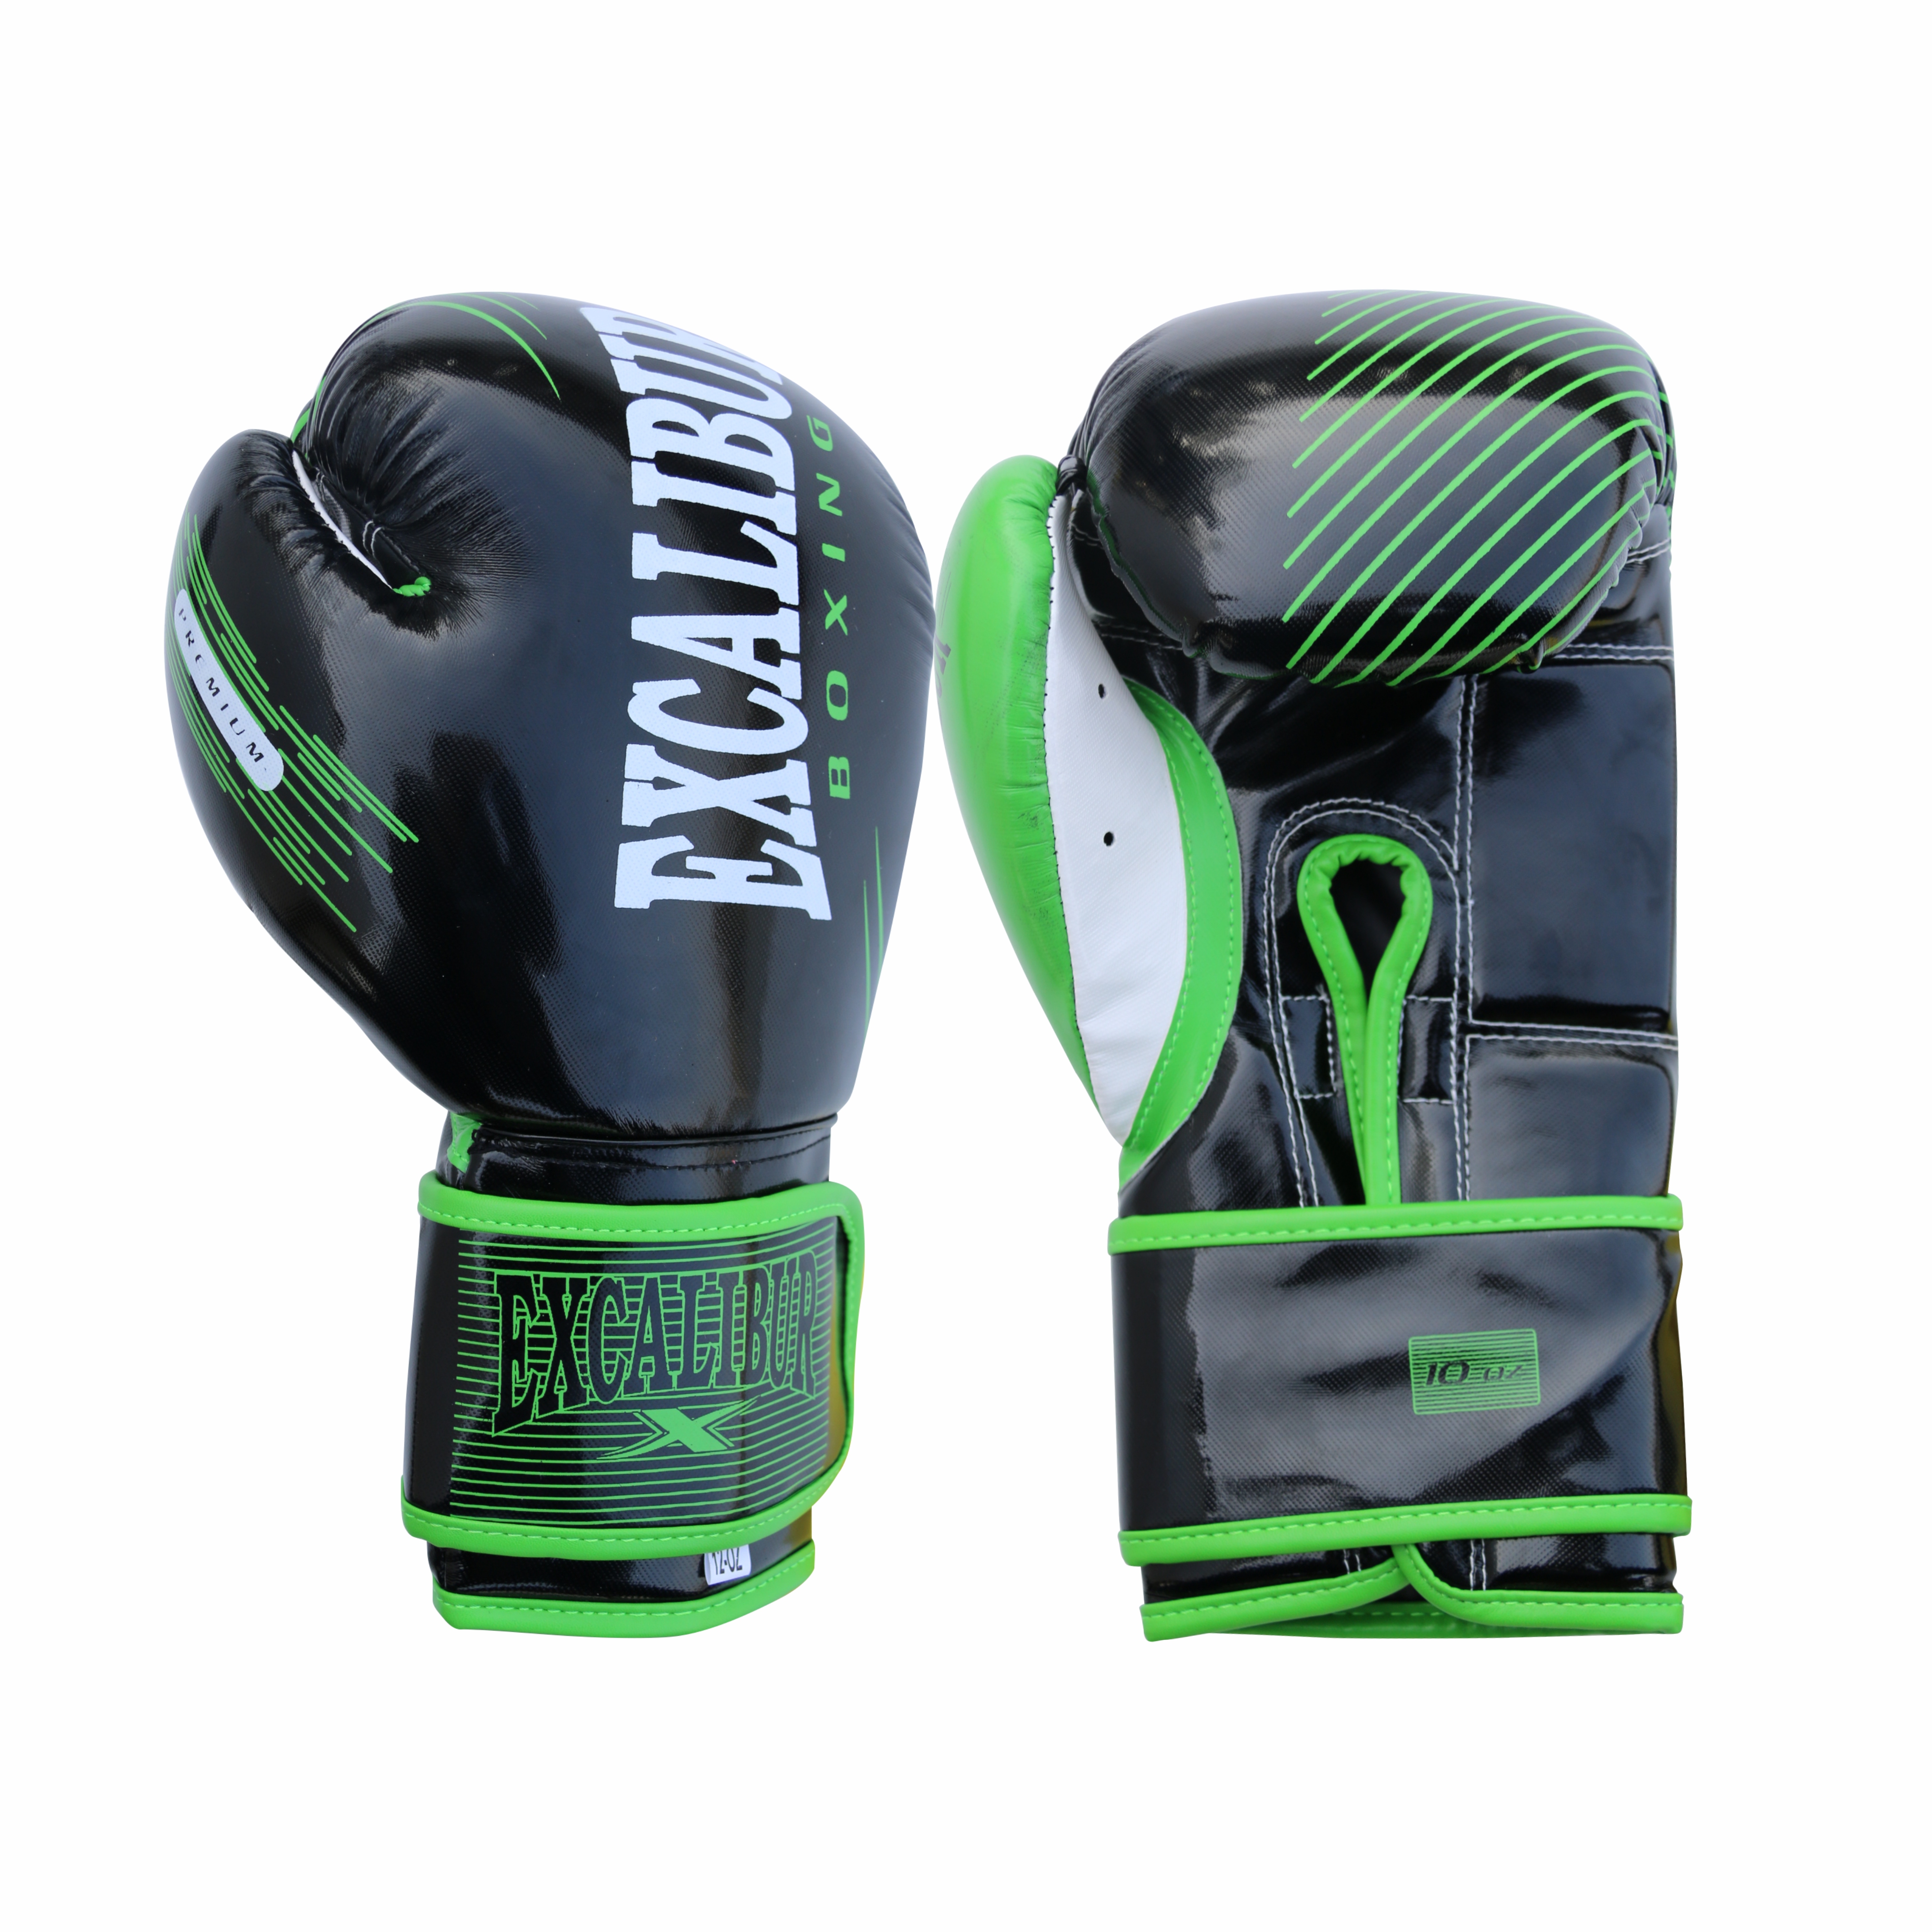 Pin Flex Boxing Gloves